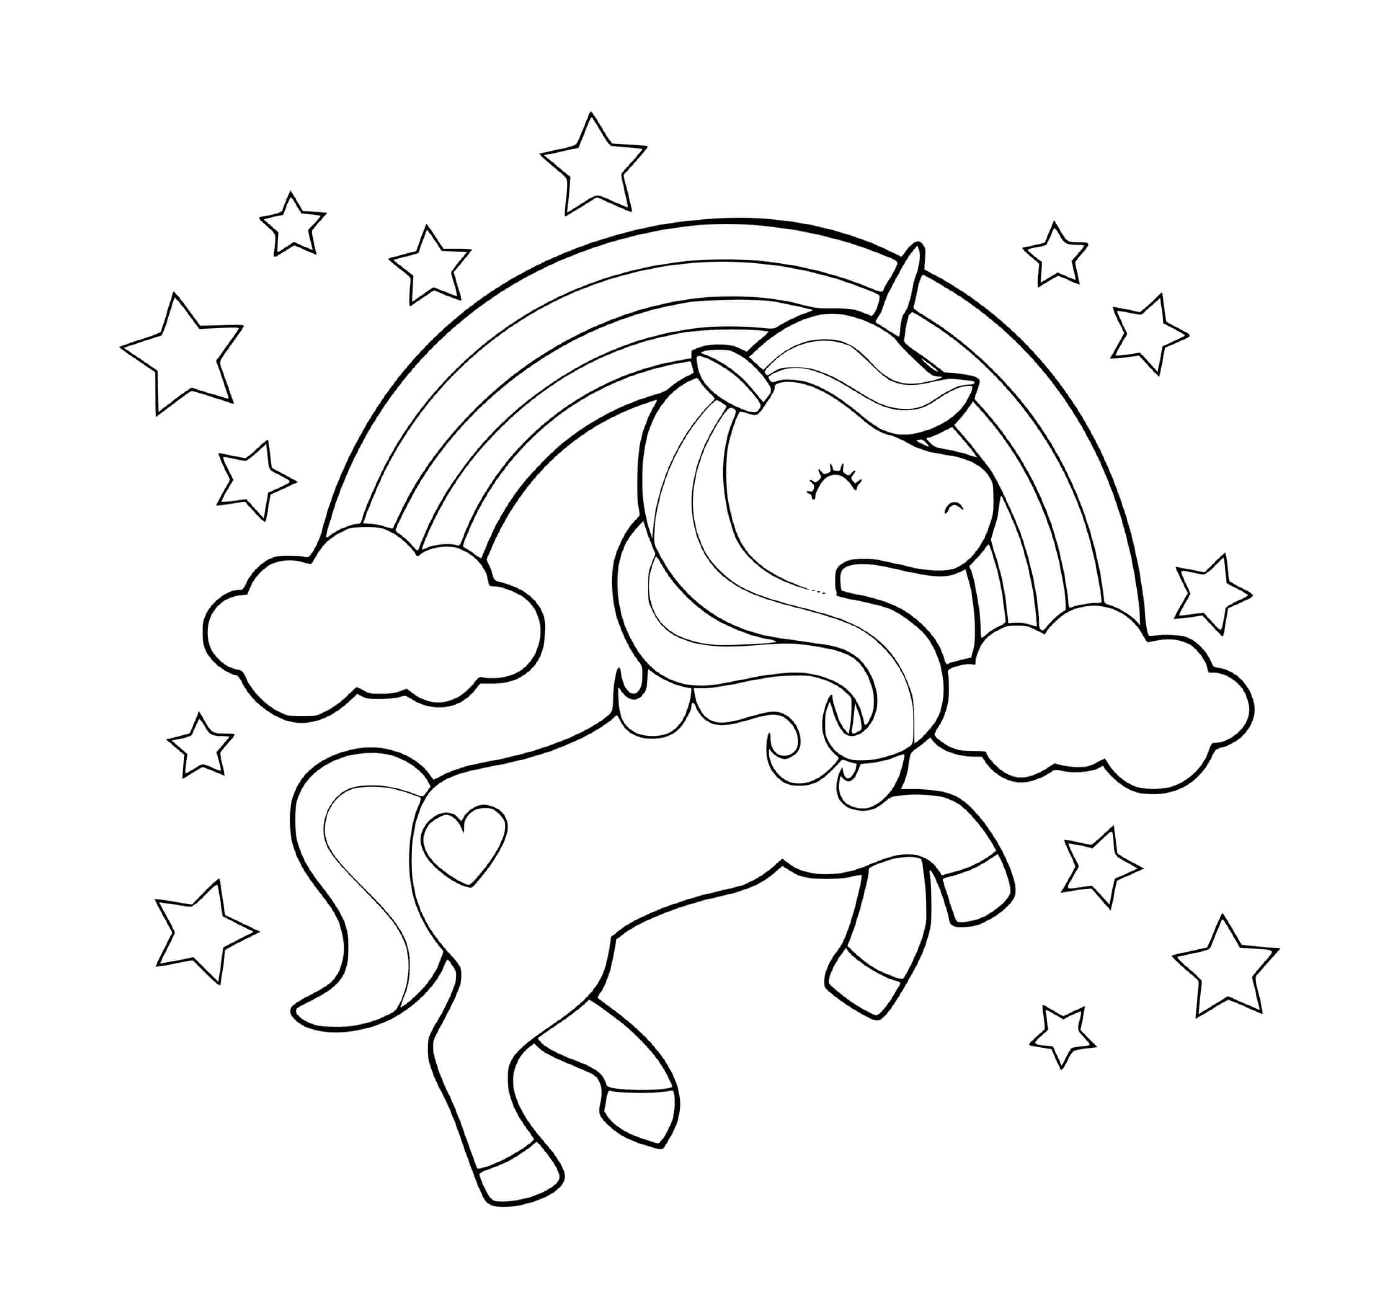  galloping unicorn with rainbow and stars 